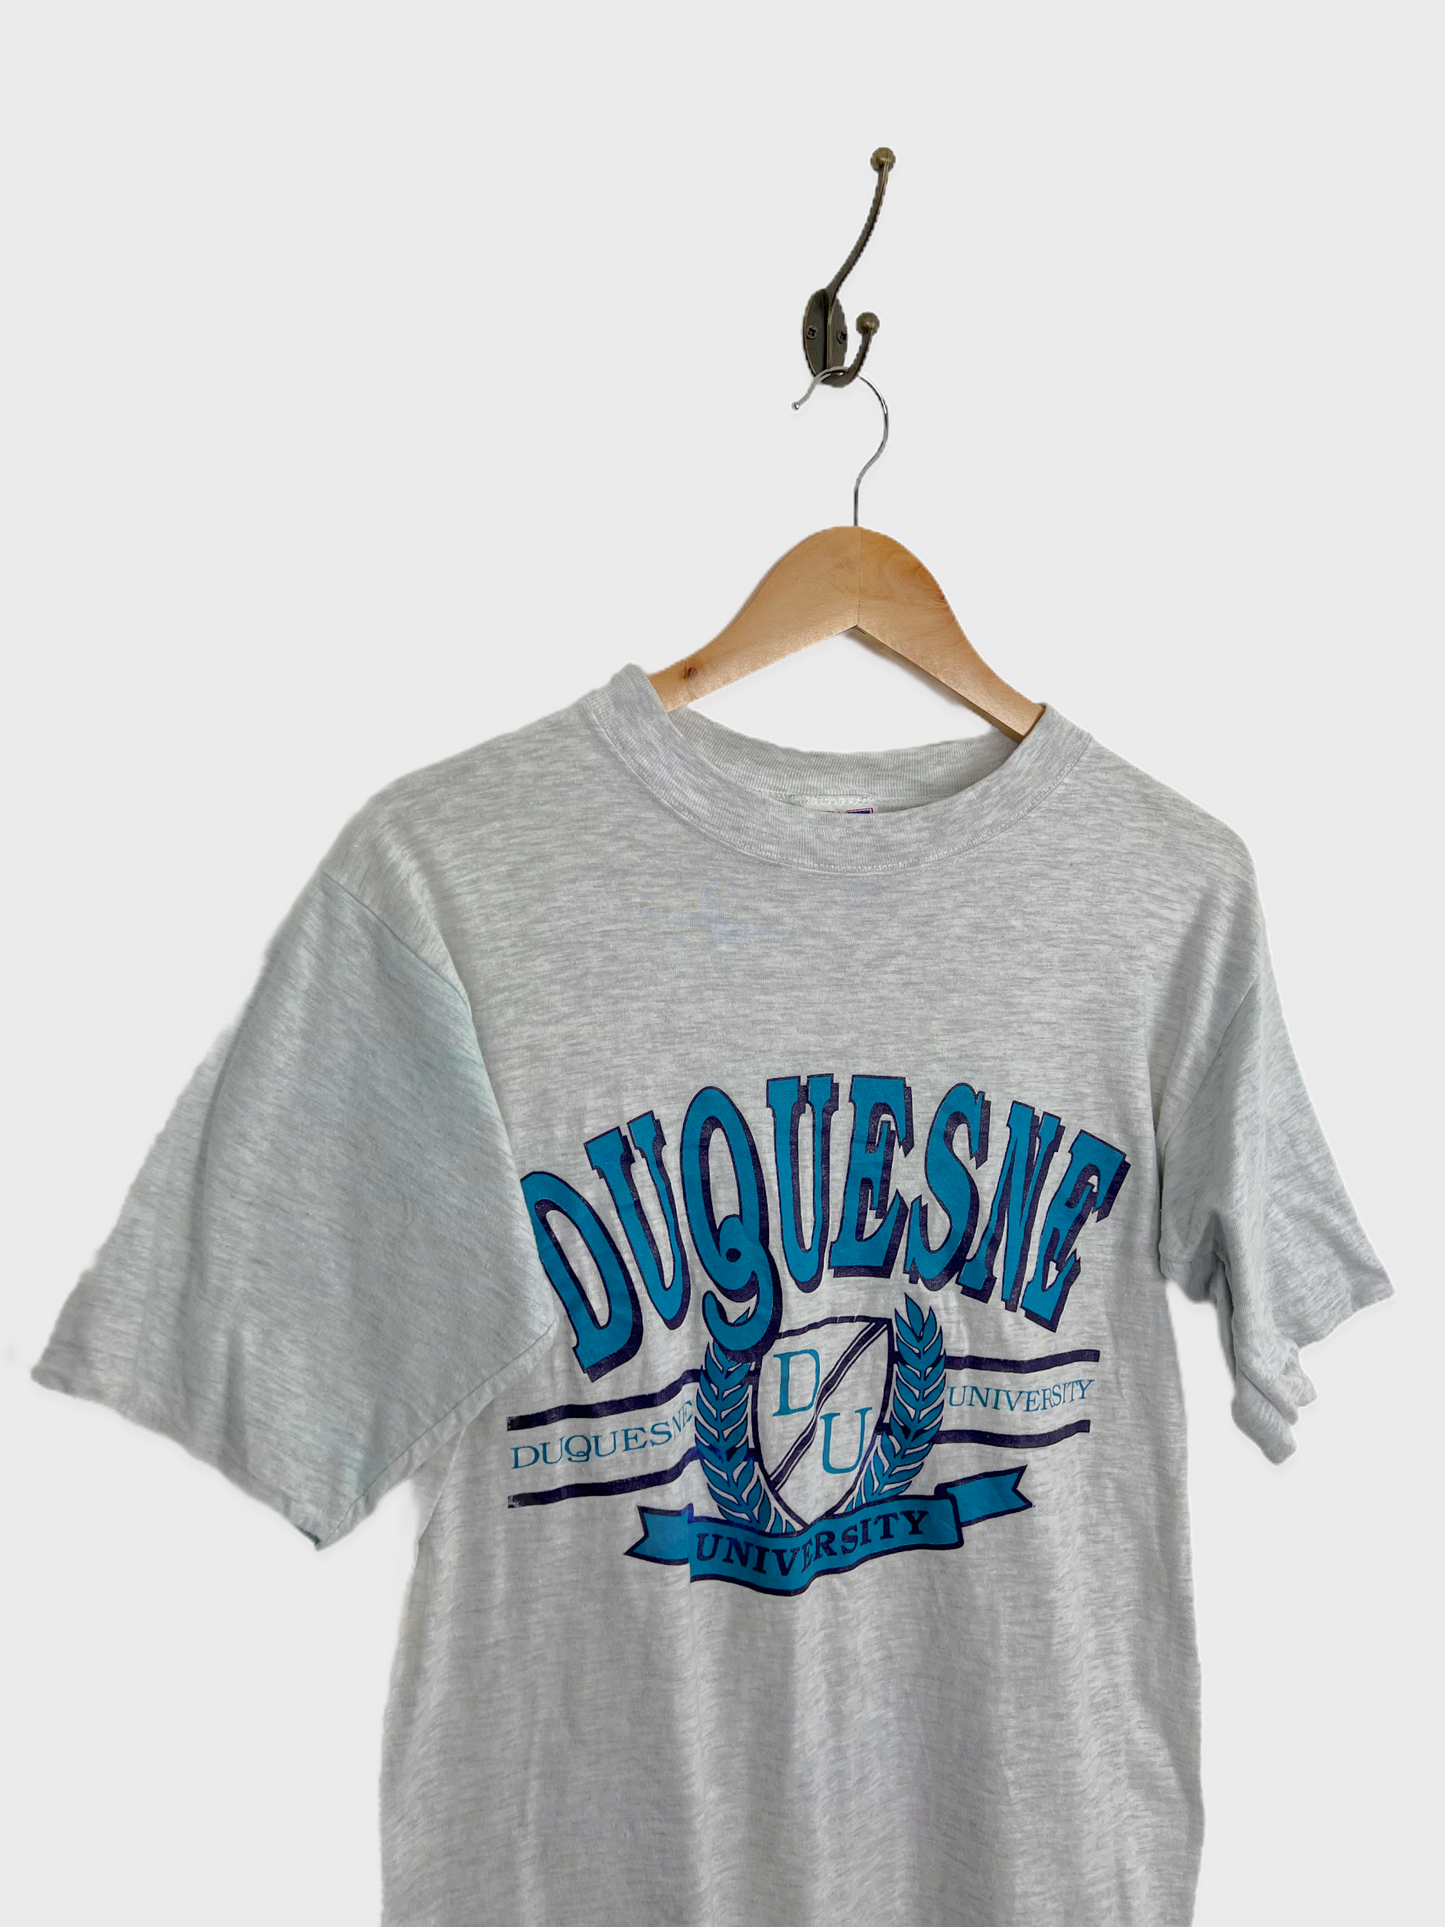 90's Duquesne University USA Made Vintage T-Shirt Size 8